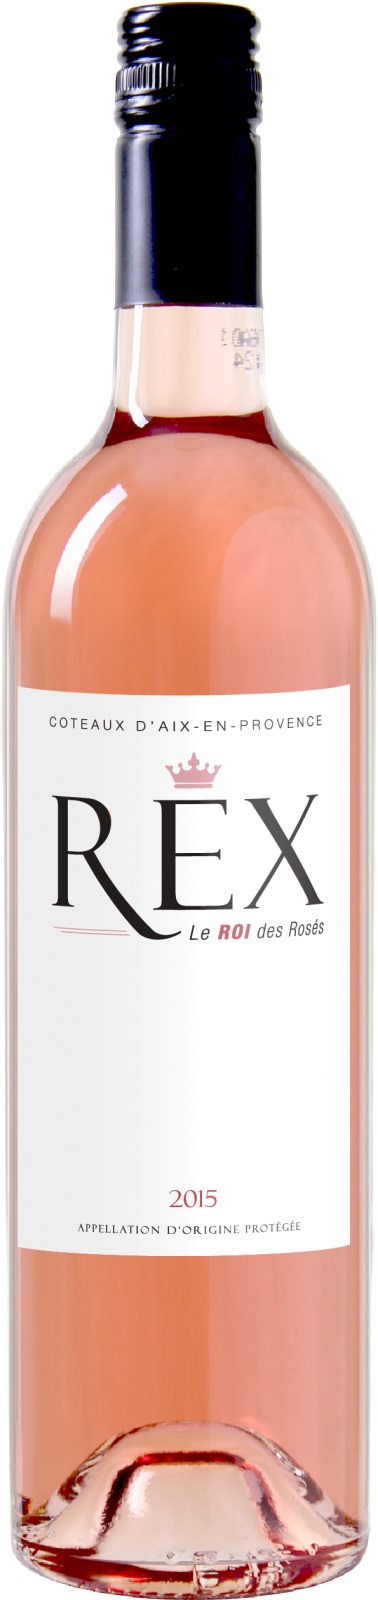 rex-rose-le-roi-des-roses-cotes-de-provence-aoc-6ks.jpg